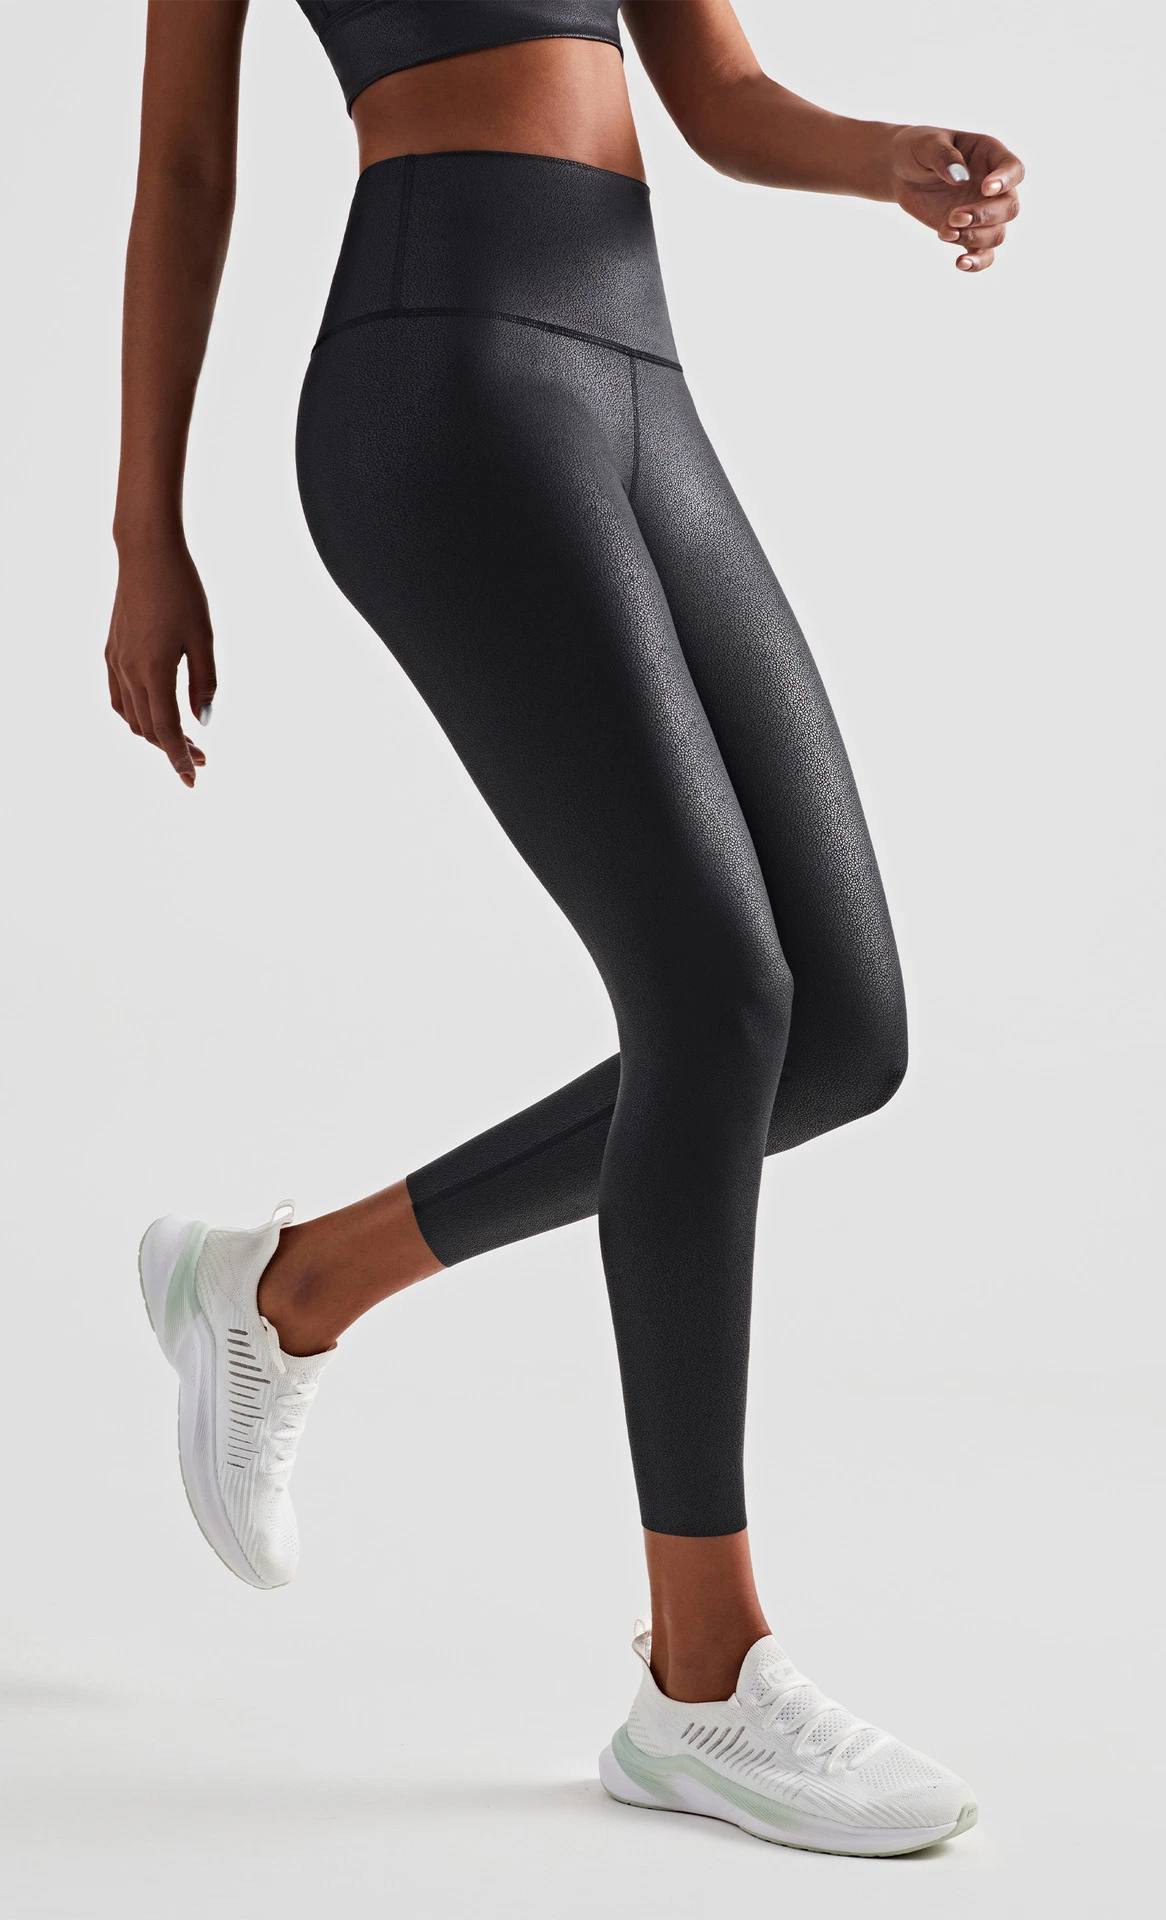 Activewear Sport Fitness Gym Tight Troursers, Tie Dye Print Workout Leggings Yoga Pants Apparel